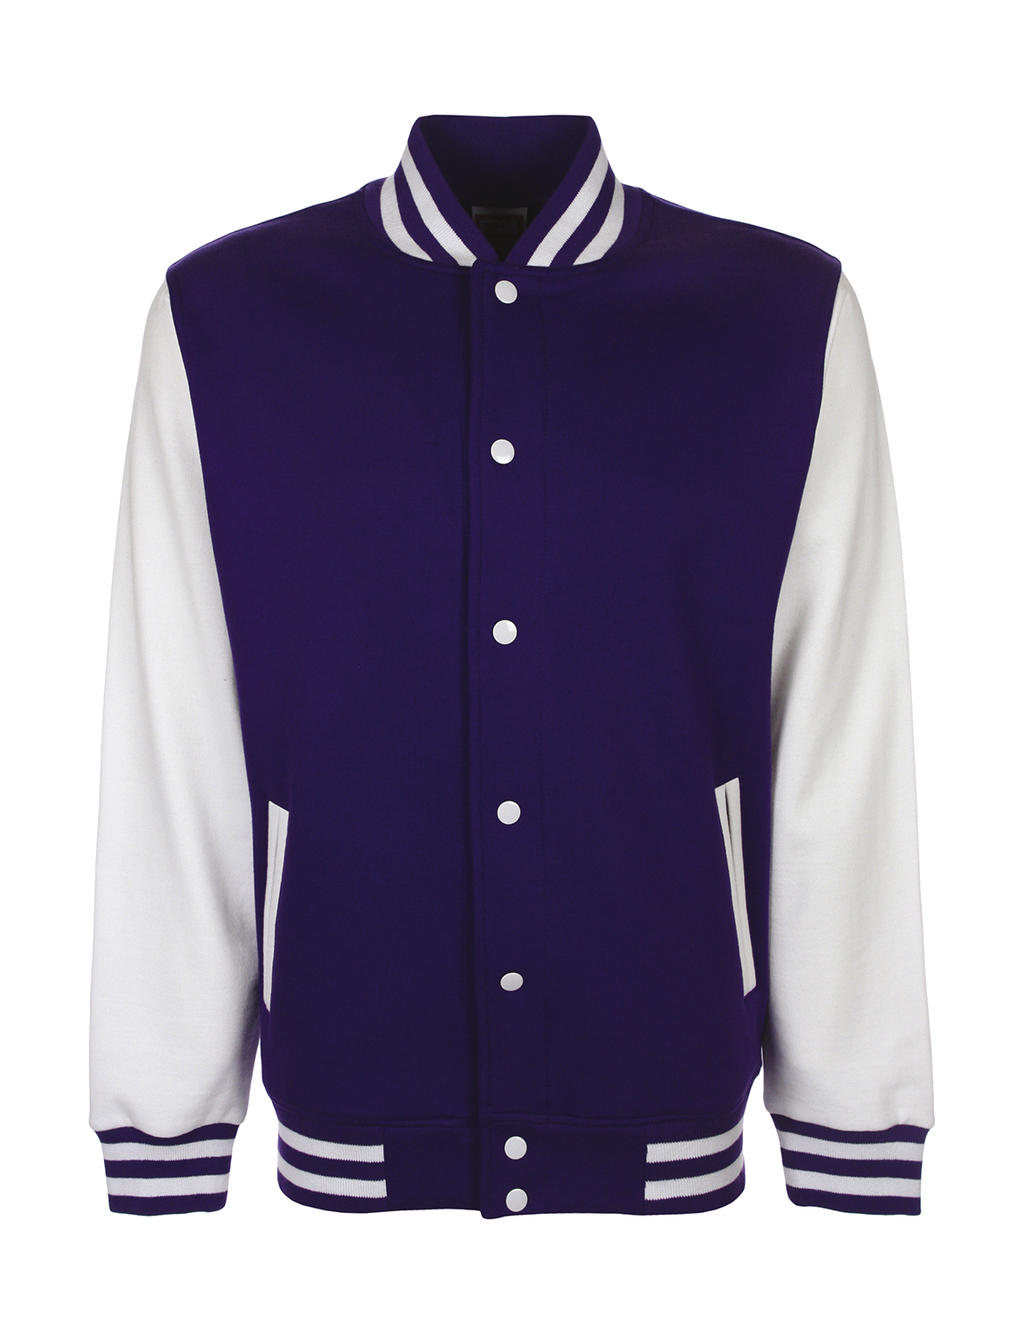  Varsity Jacket in Farbe Purple/White